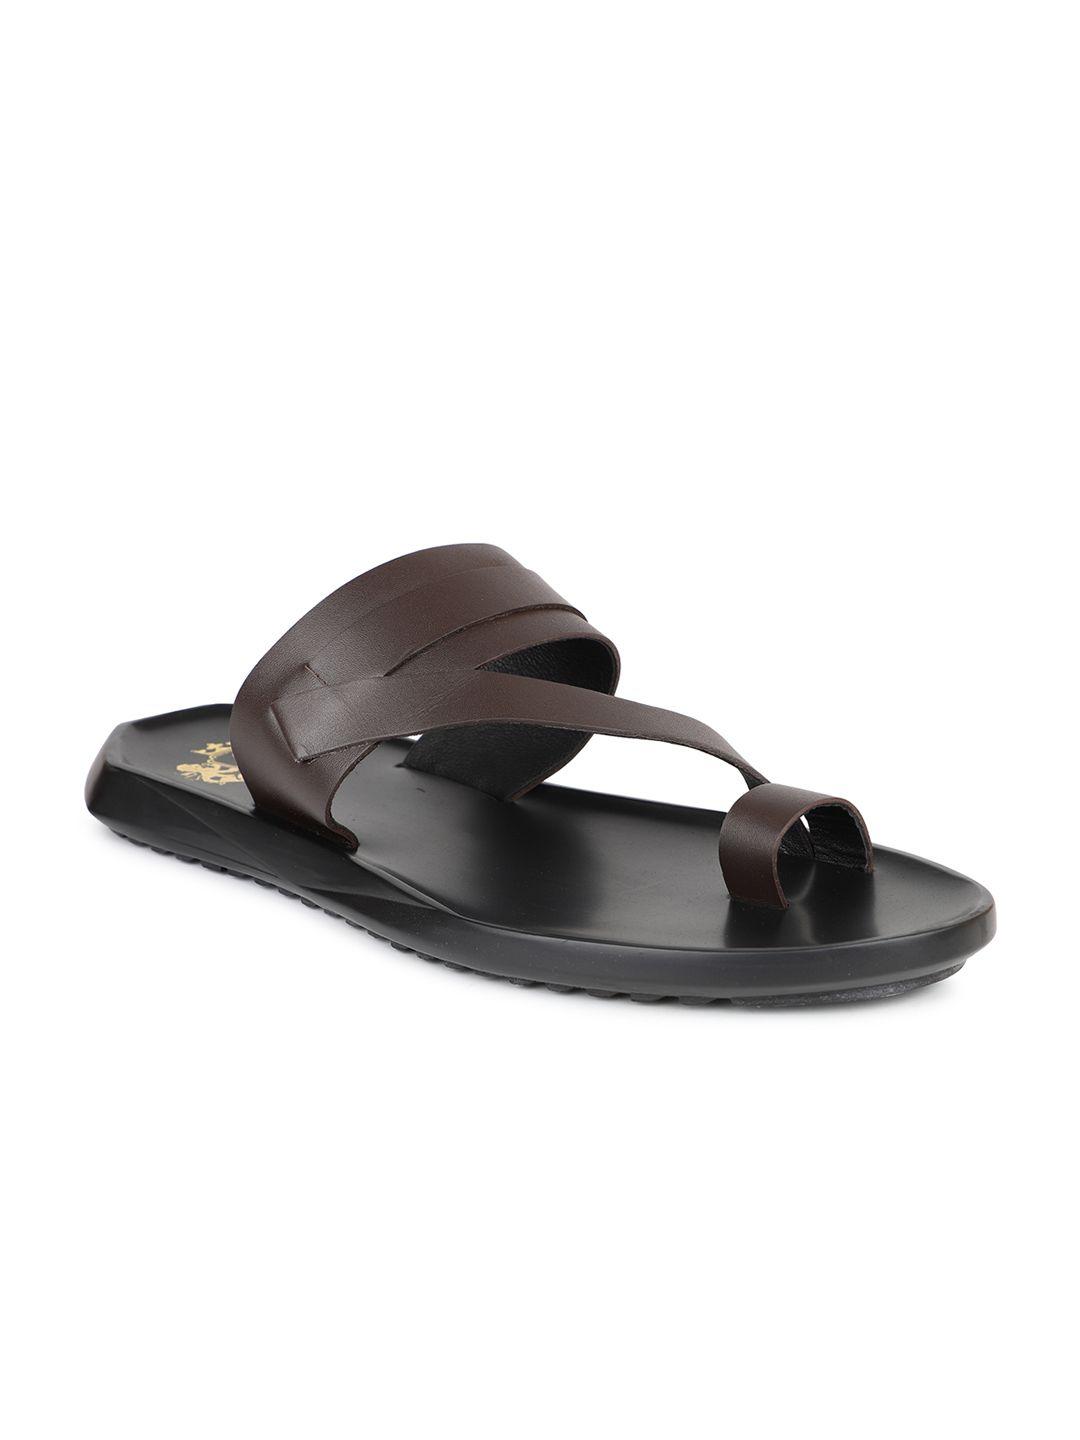 atesber men leather slip-on comfort sandals